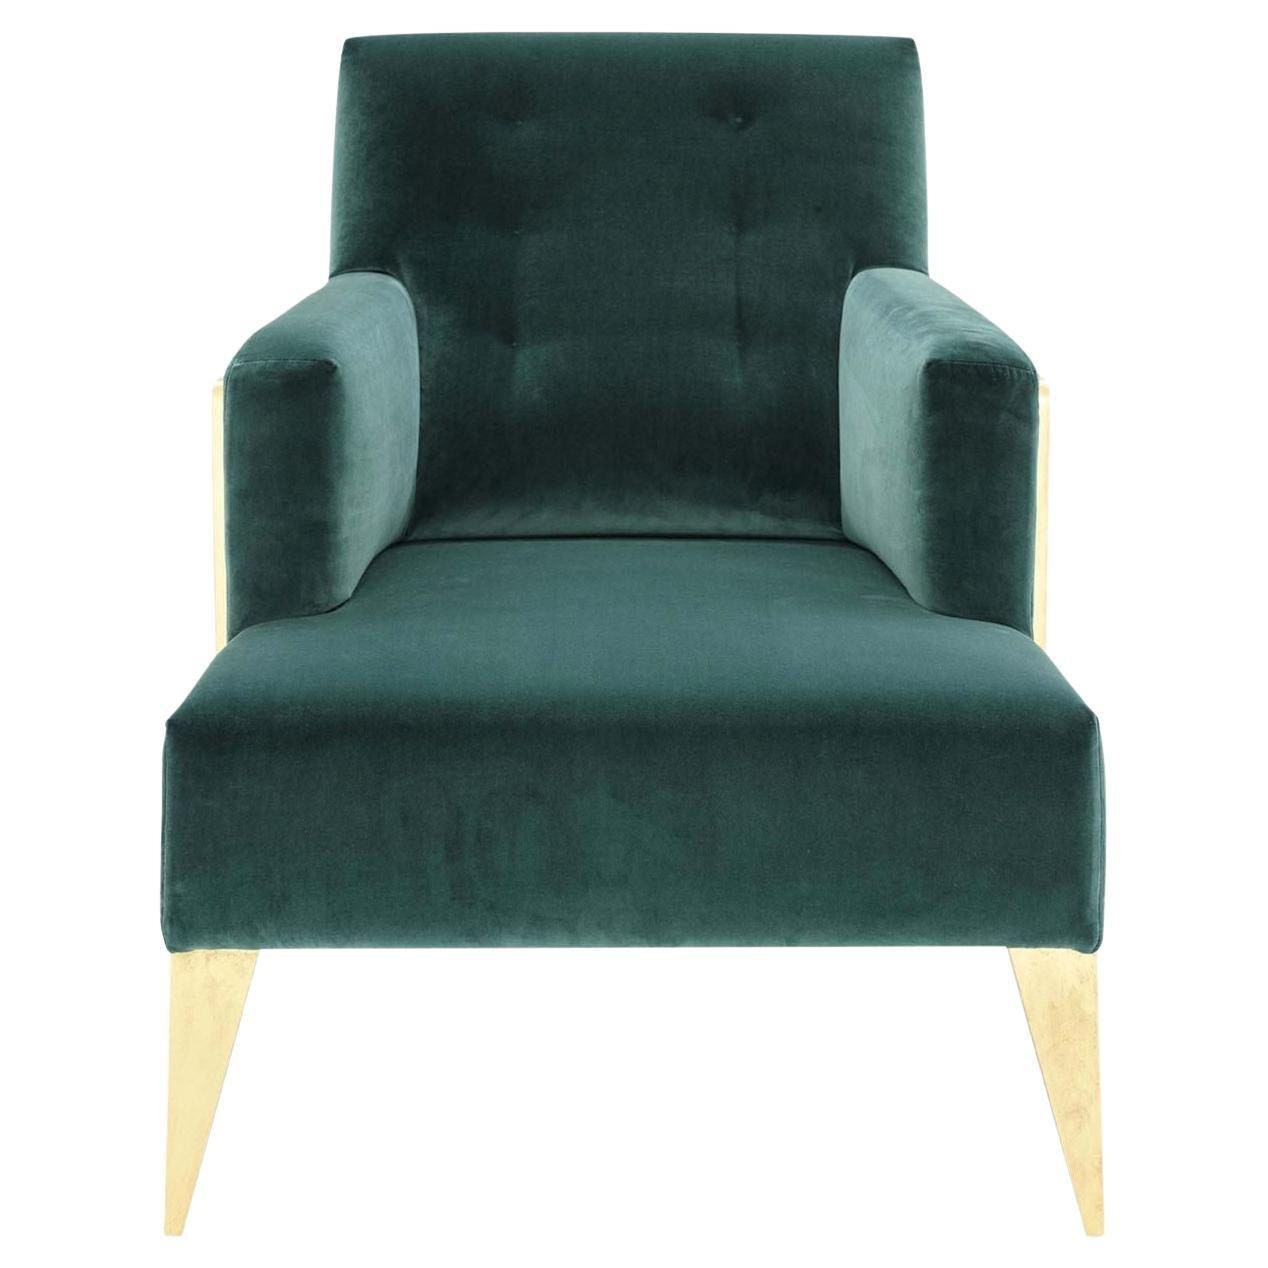 Goa Relax Sessel mit Smaragd und goldenem Sessel im Angebot